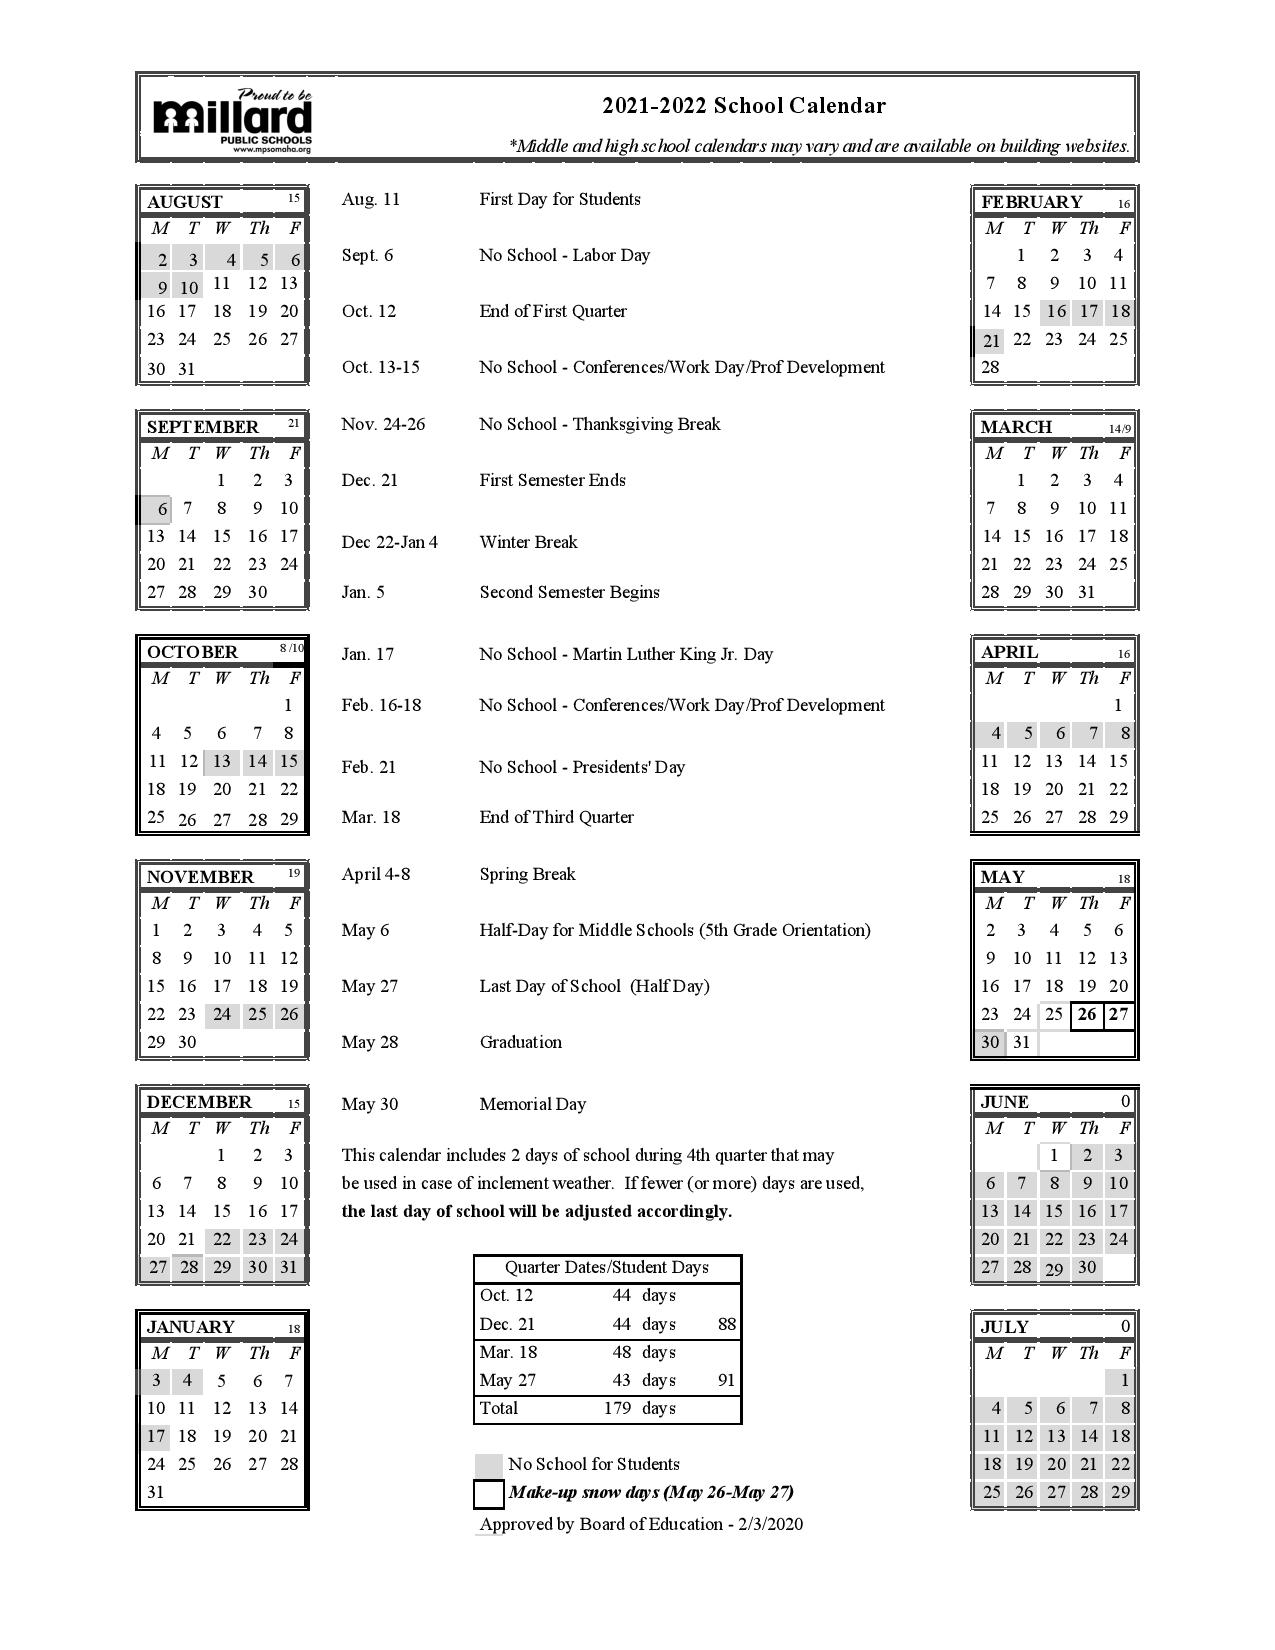 Millard Public Schools Calendar 2021 2022 In Pdf